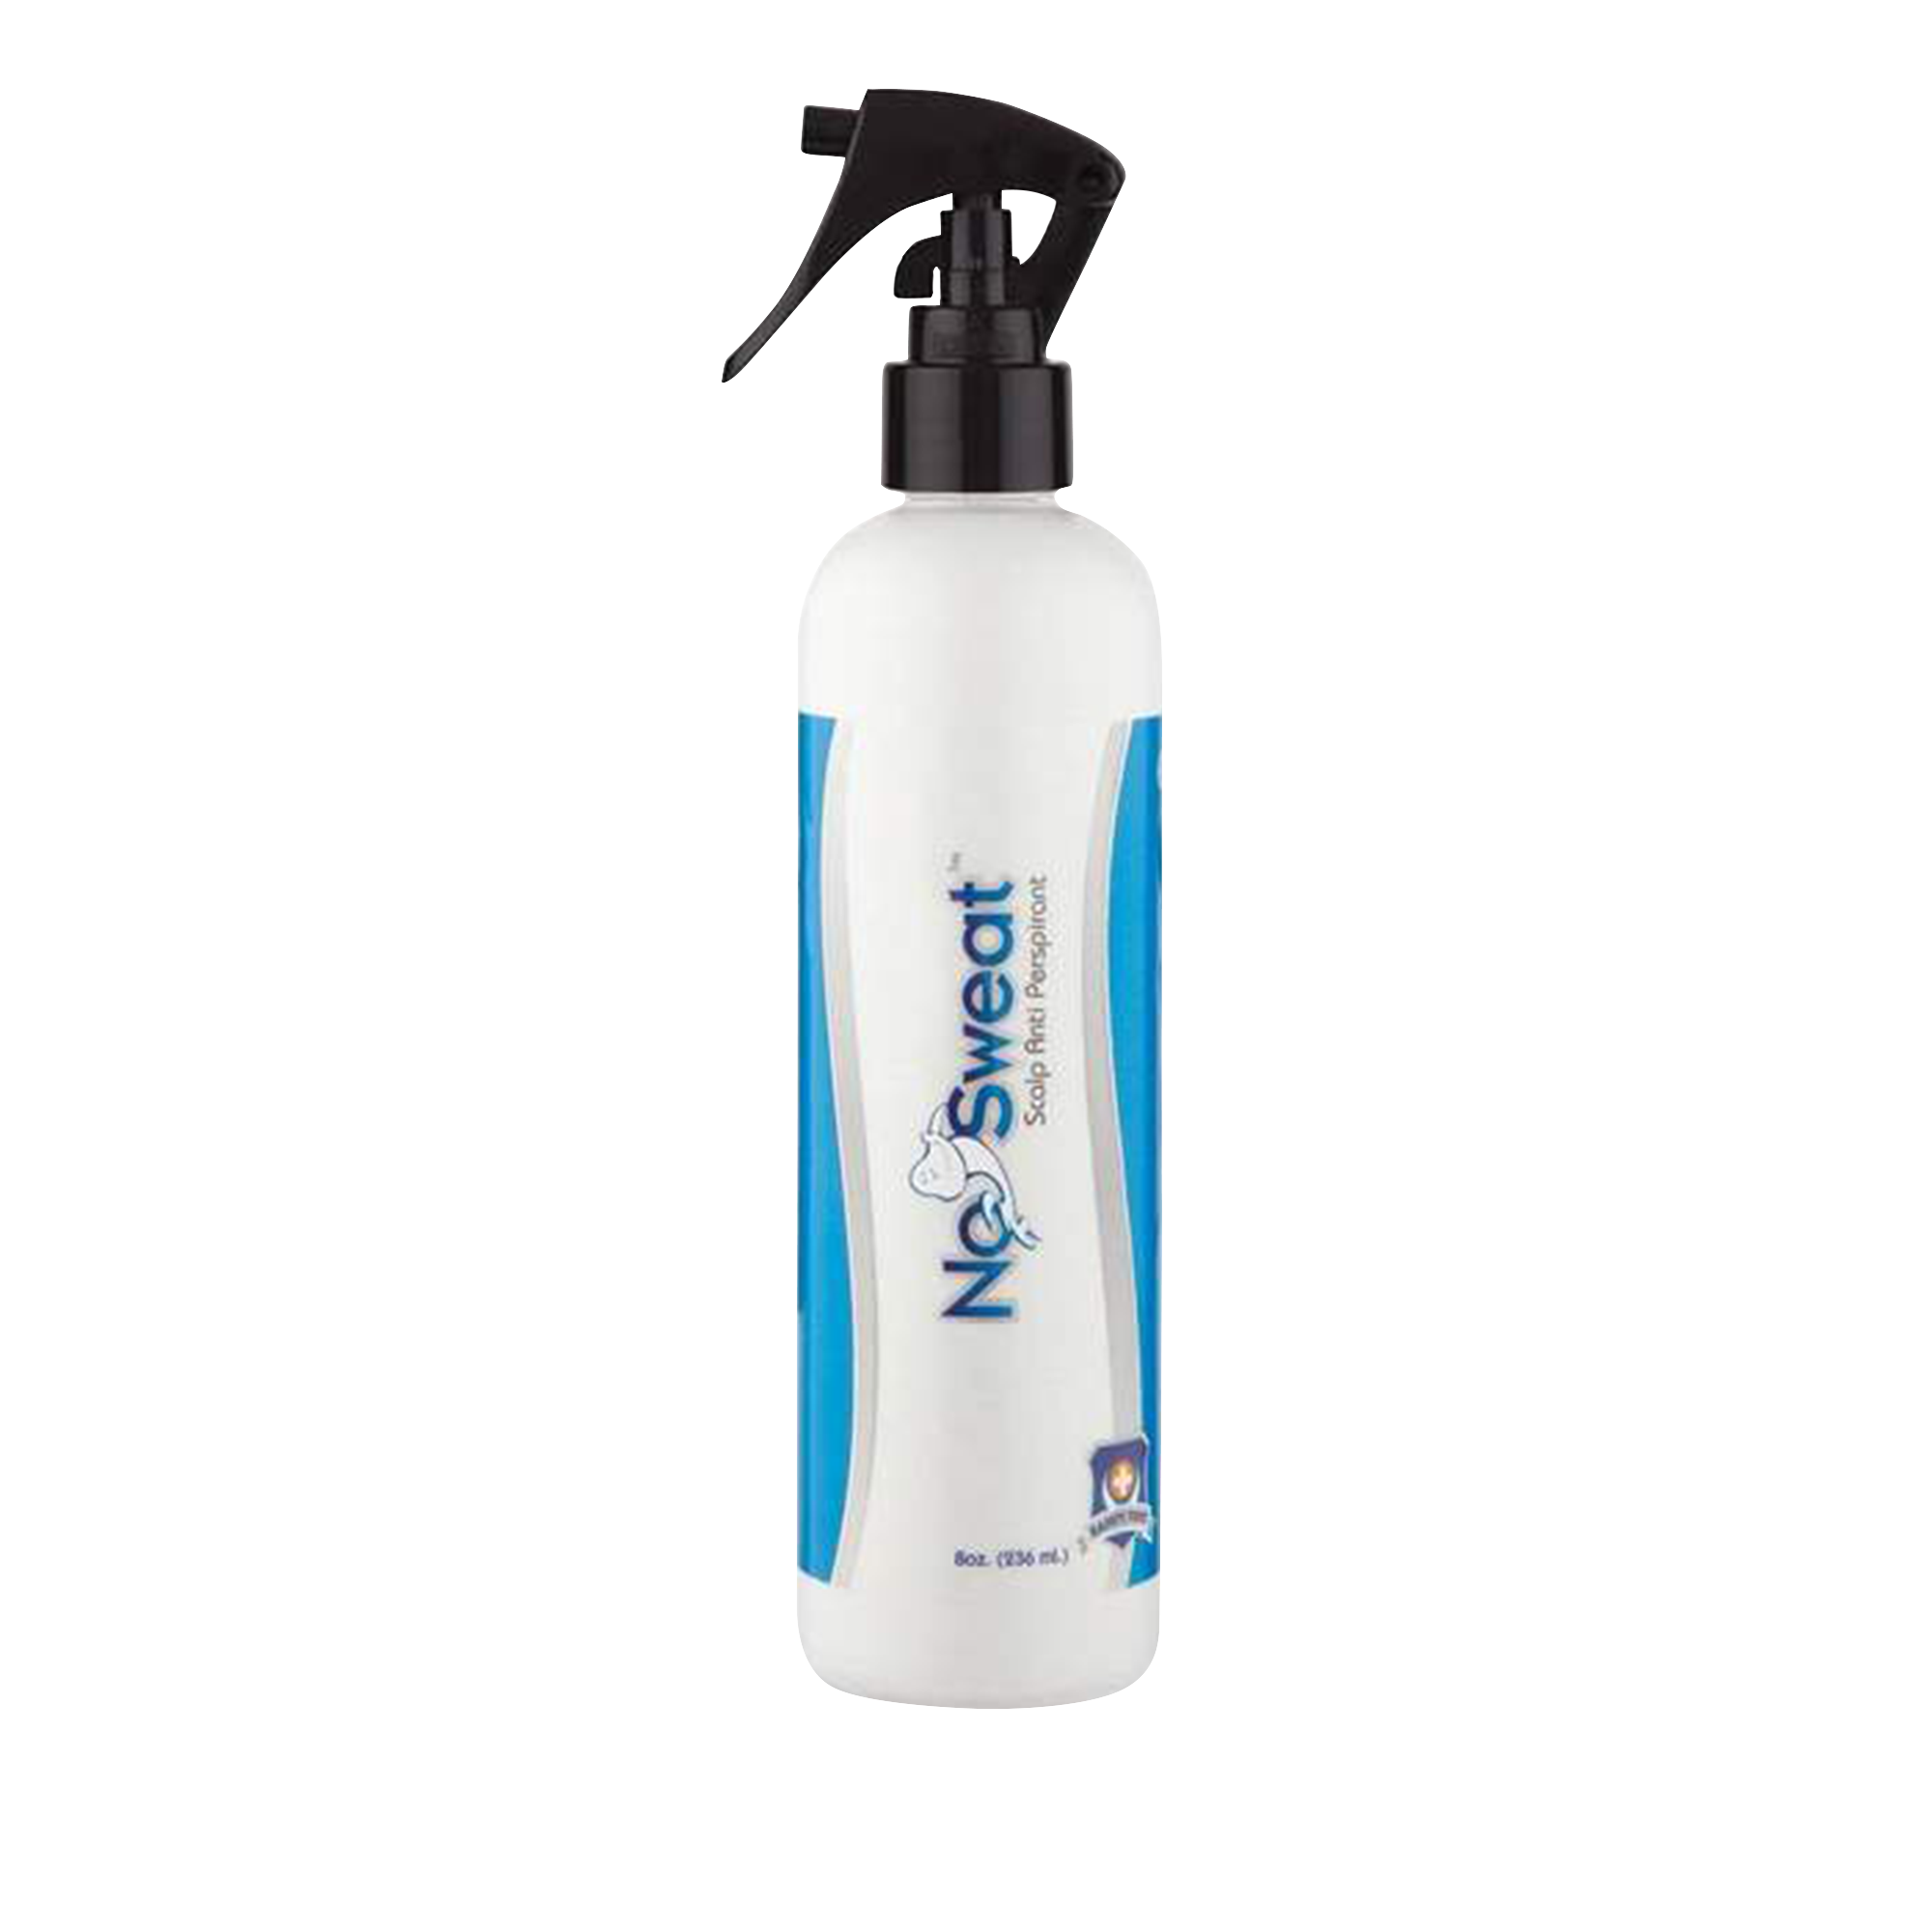 Salon Pro Bonding Glue Conditioning Remover Shampoo 4oz – LABeautyClub